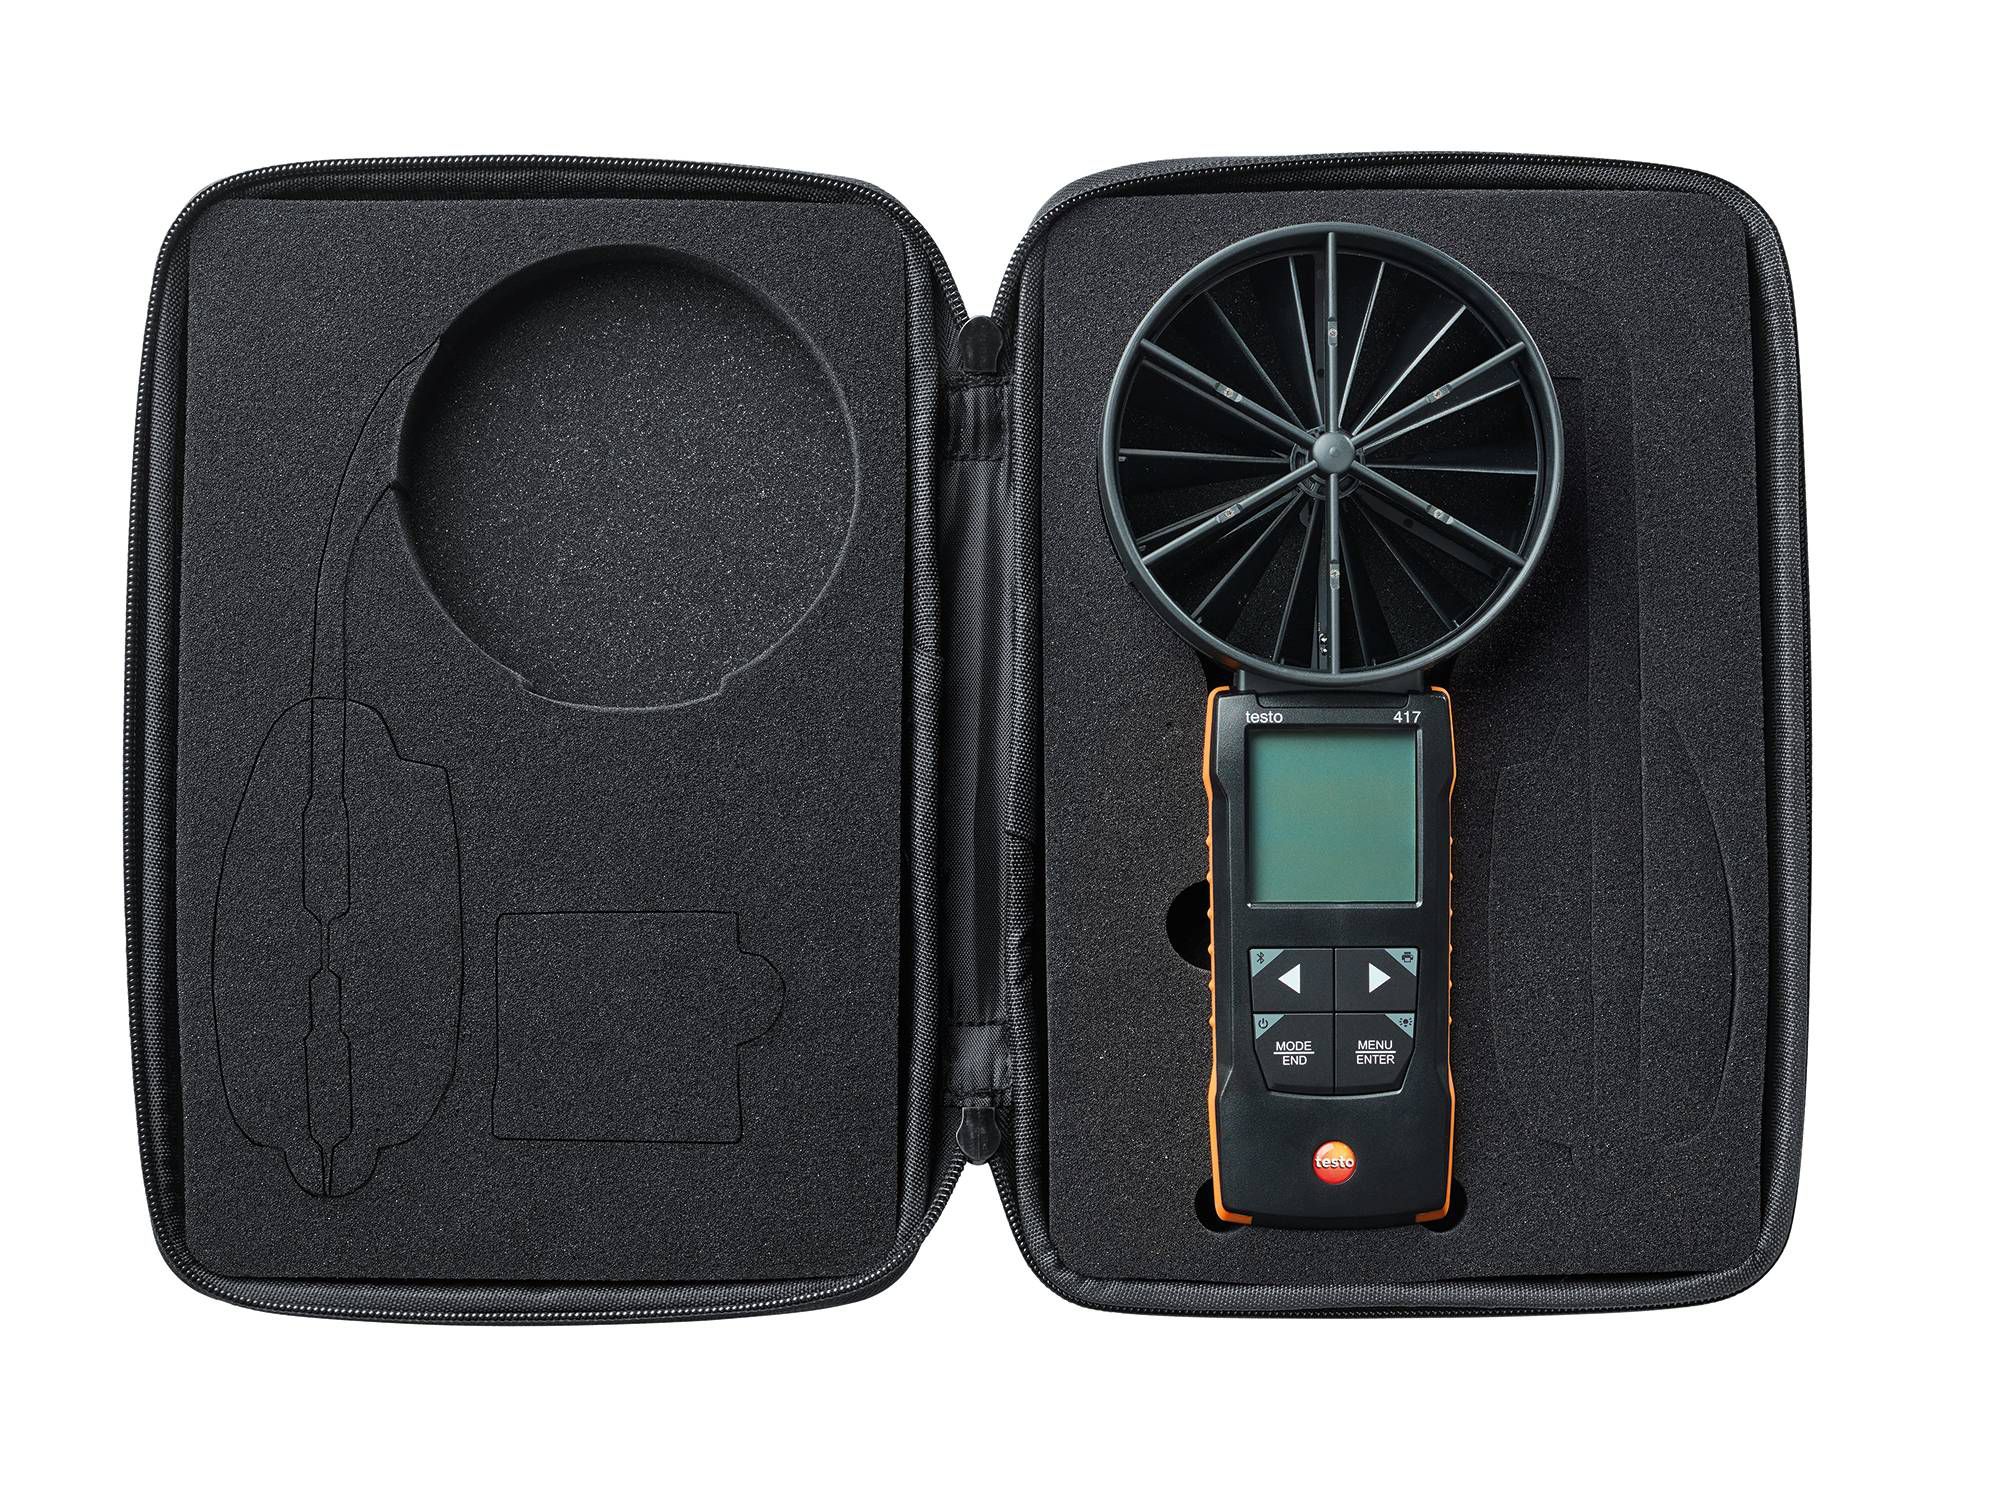 testo 417 - Digitales 100 mm-Flügelrad-Anemometer mit App-Anbindung